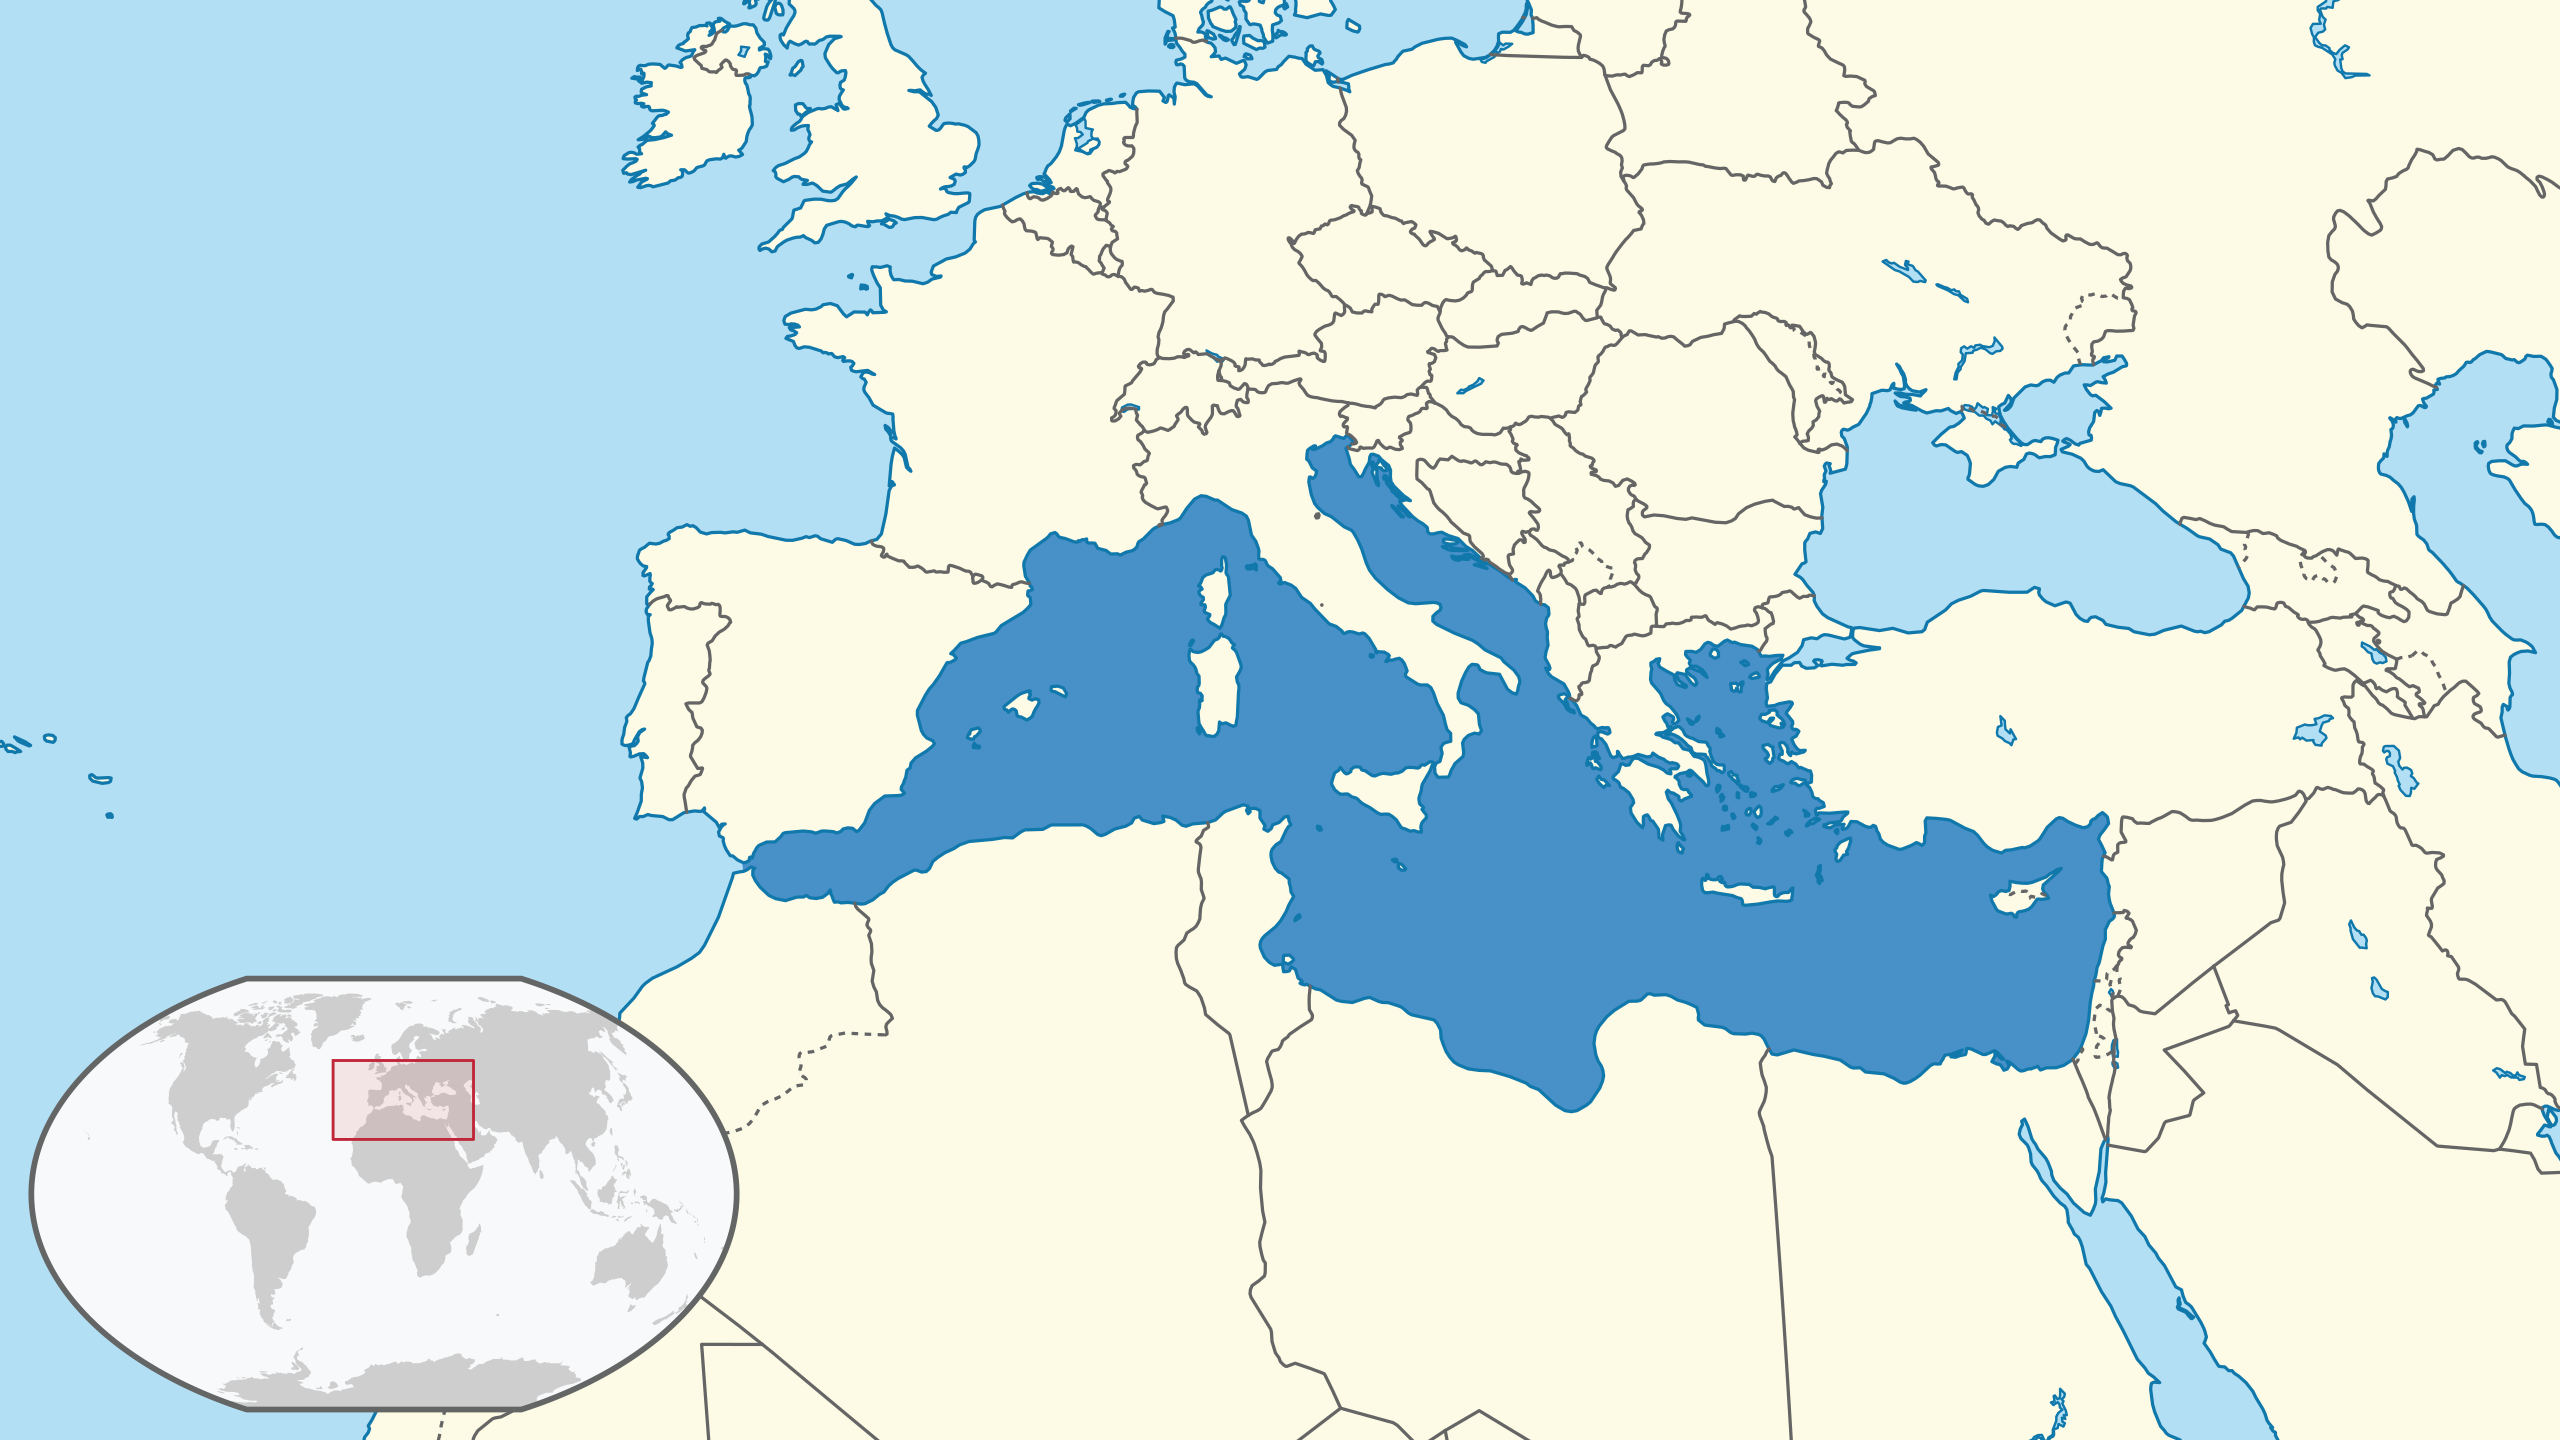 mediterranean sea map